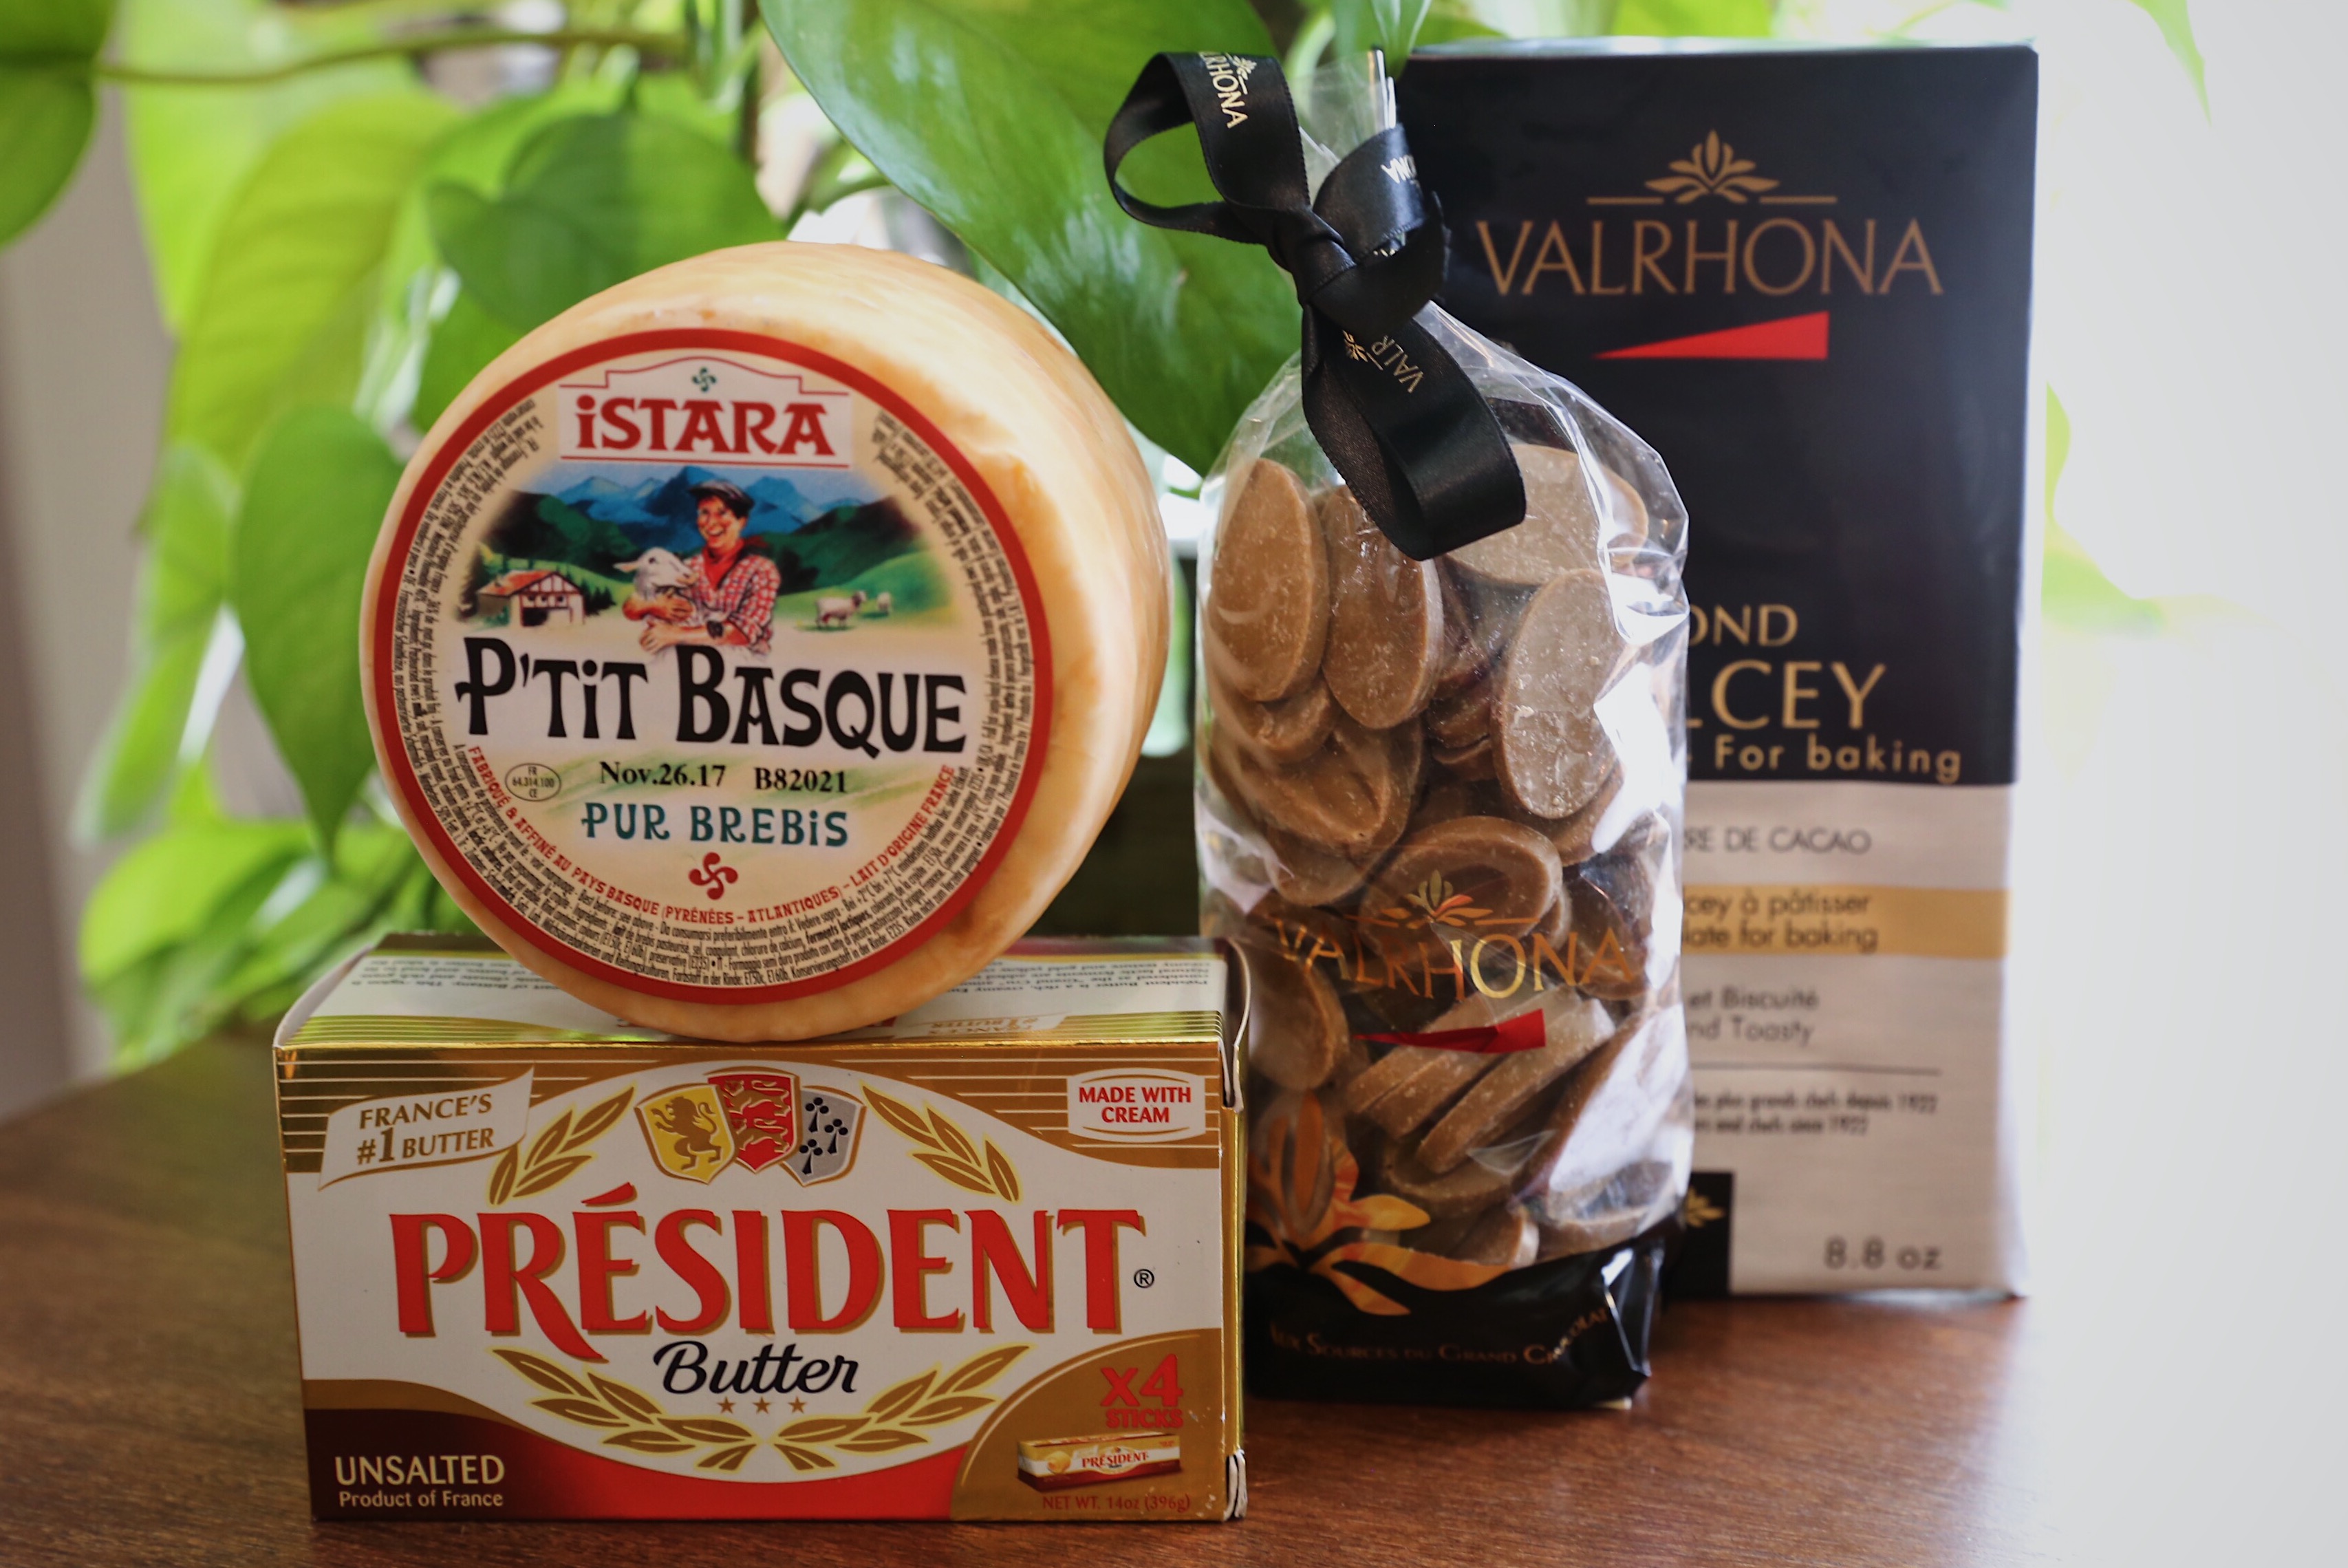 VALRHONA Dulcey 32% baking bar Orelys 35% 500g baking bag President Butter ISTARA P’TIT BASQUE